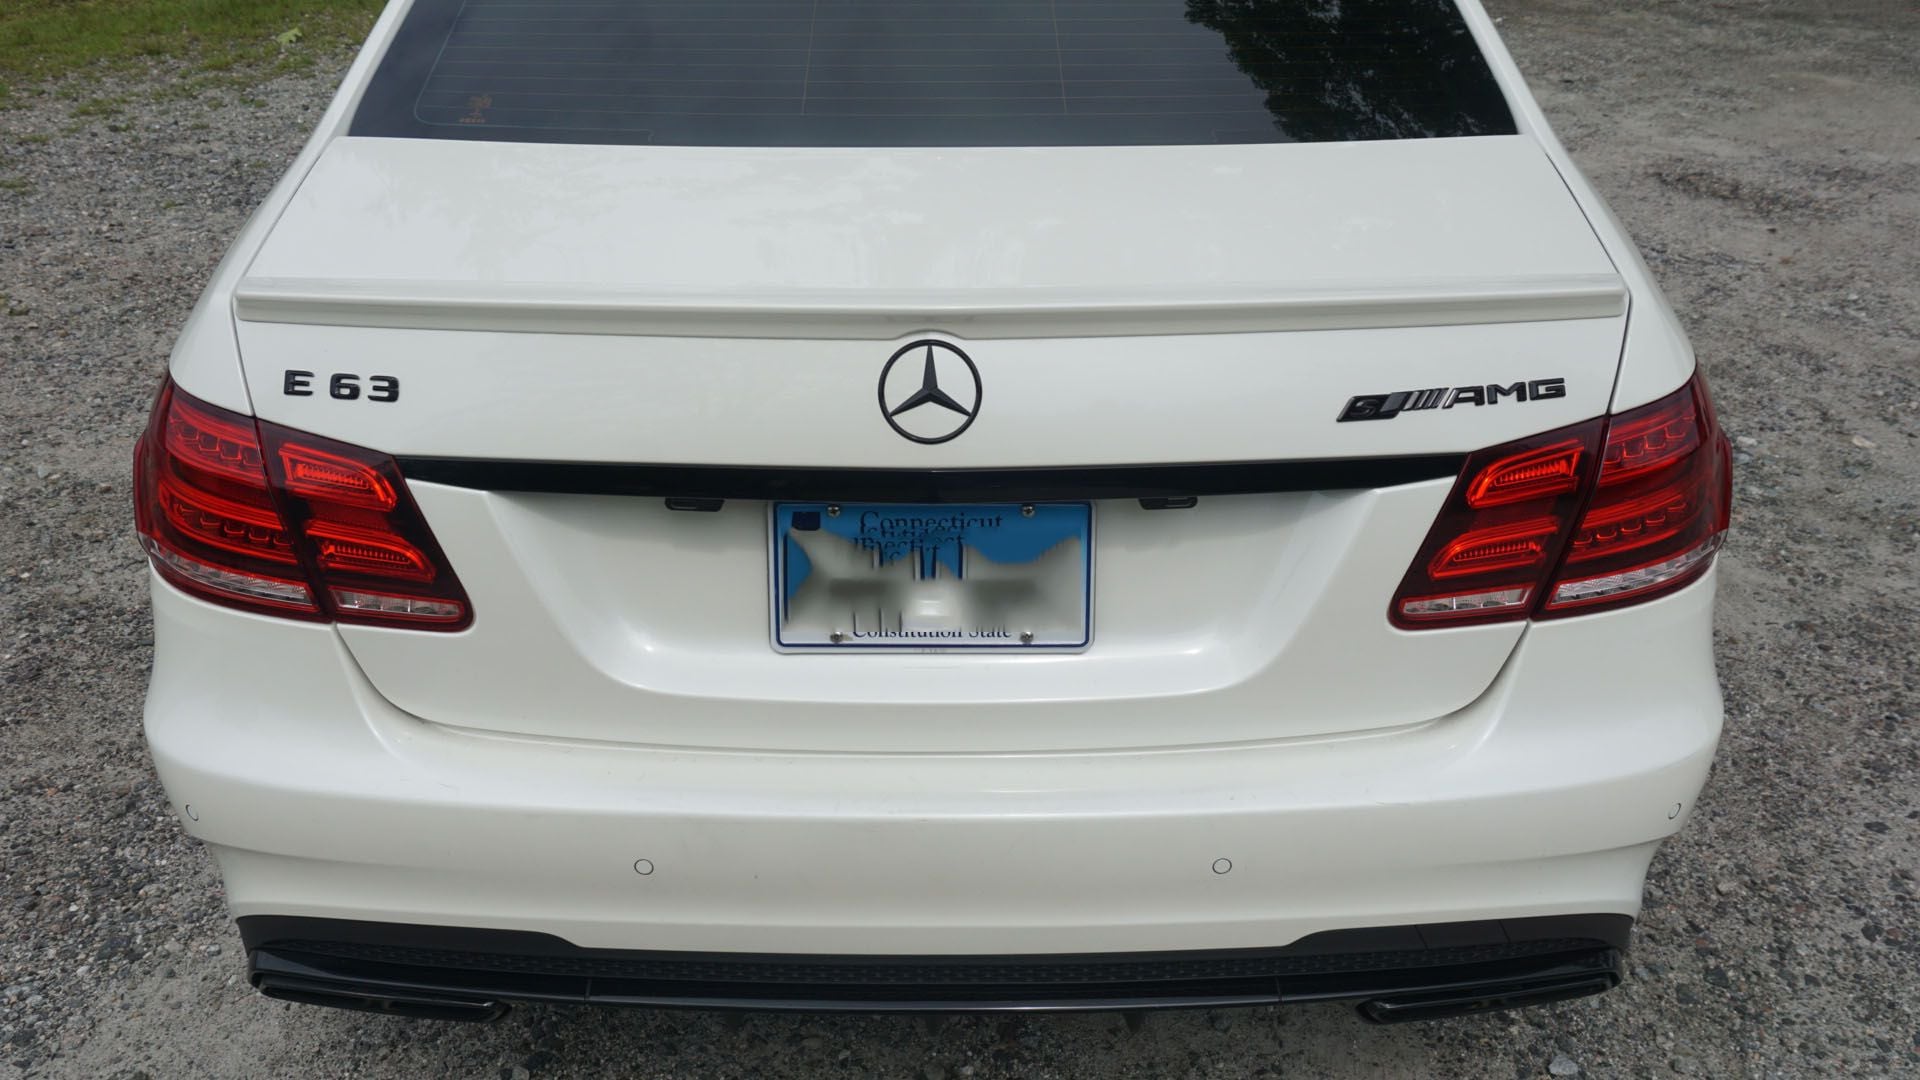 2015 Mercedes-Benz E63 AMG S - RARE Color Combo 2015 Mercedes E63S 4-MATIC Sedan Turnkey with CPO Warranty - Used - VIN WDDHF7GB2FB116076 - 42,700 Miles - AWD - Automatic - Sedan - White - Fairfield County, CT 06902, United States